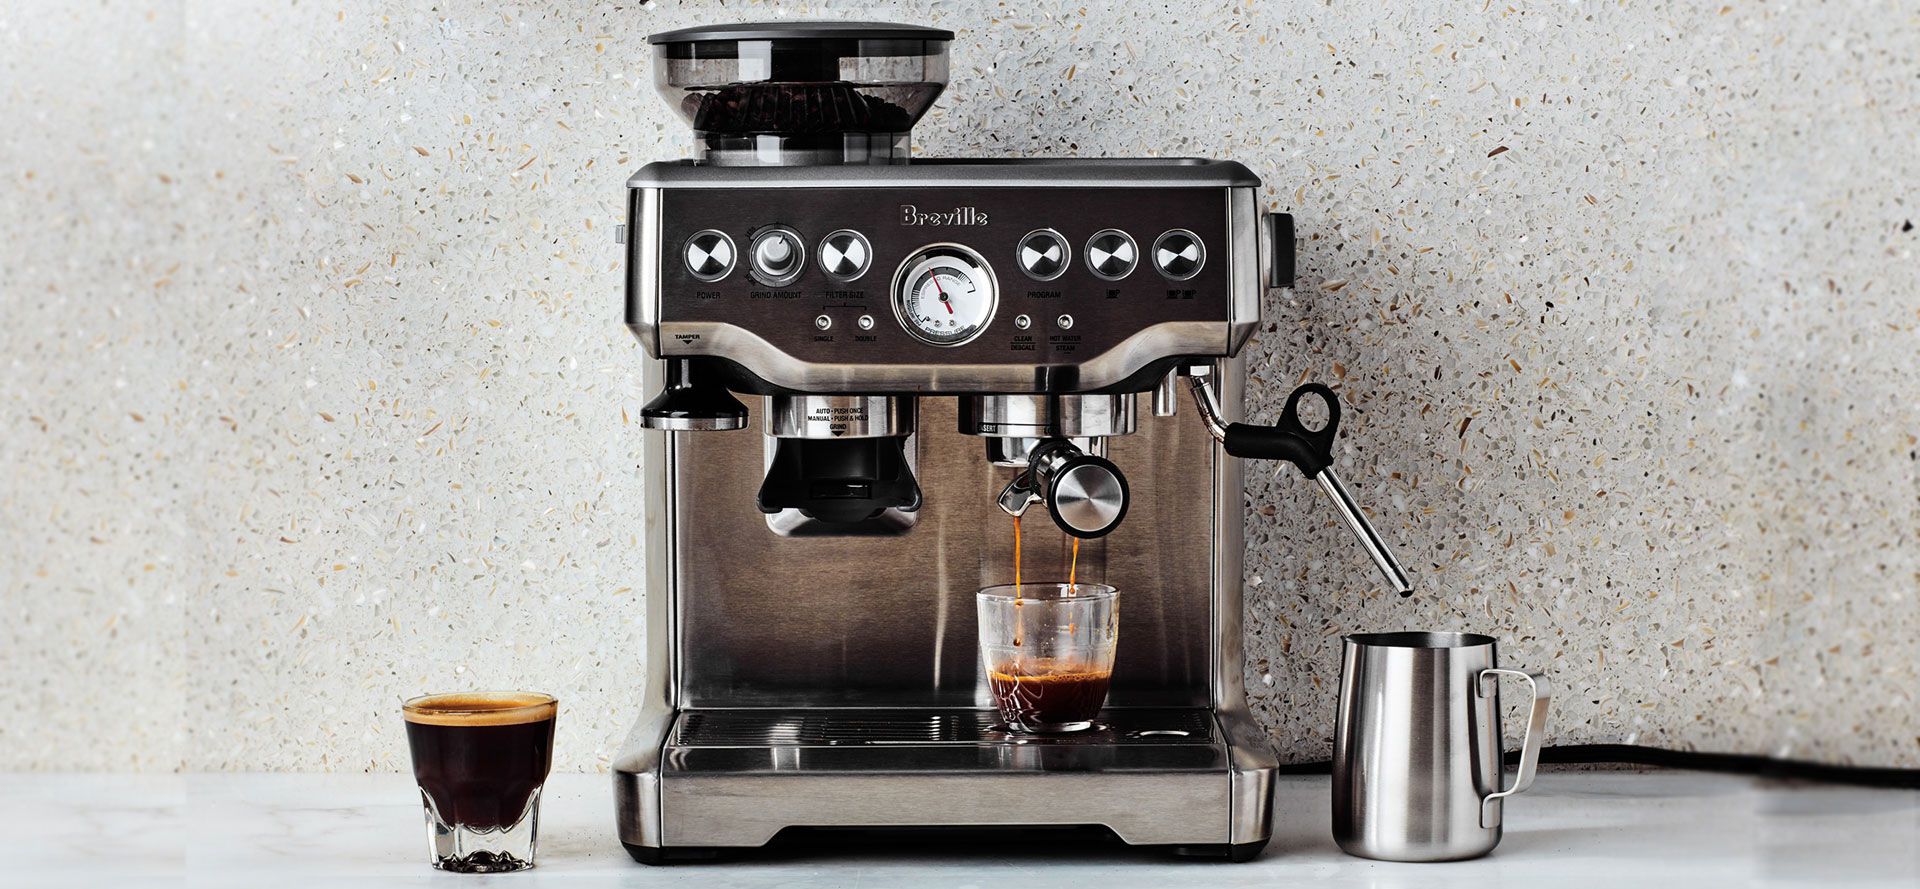 Small Espresso Machine With Grinder.